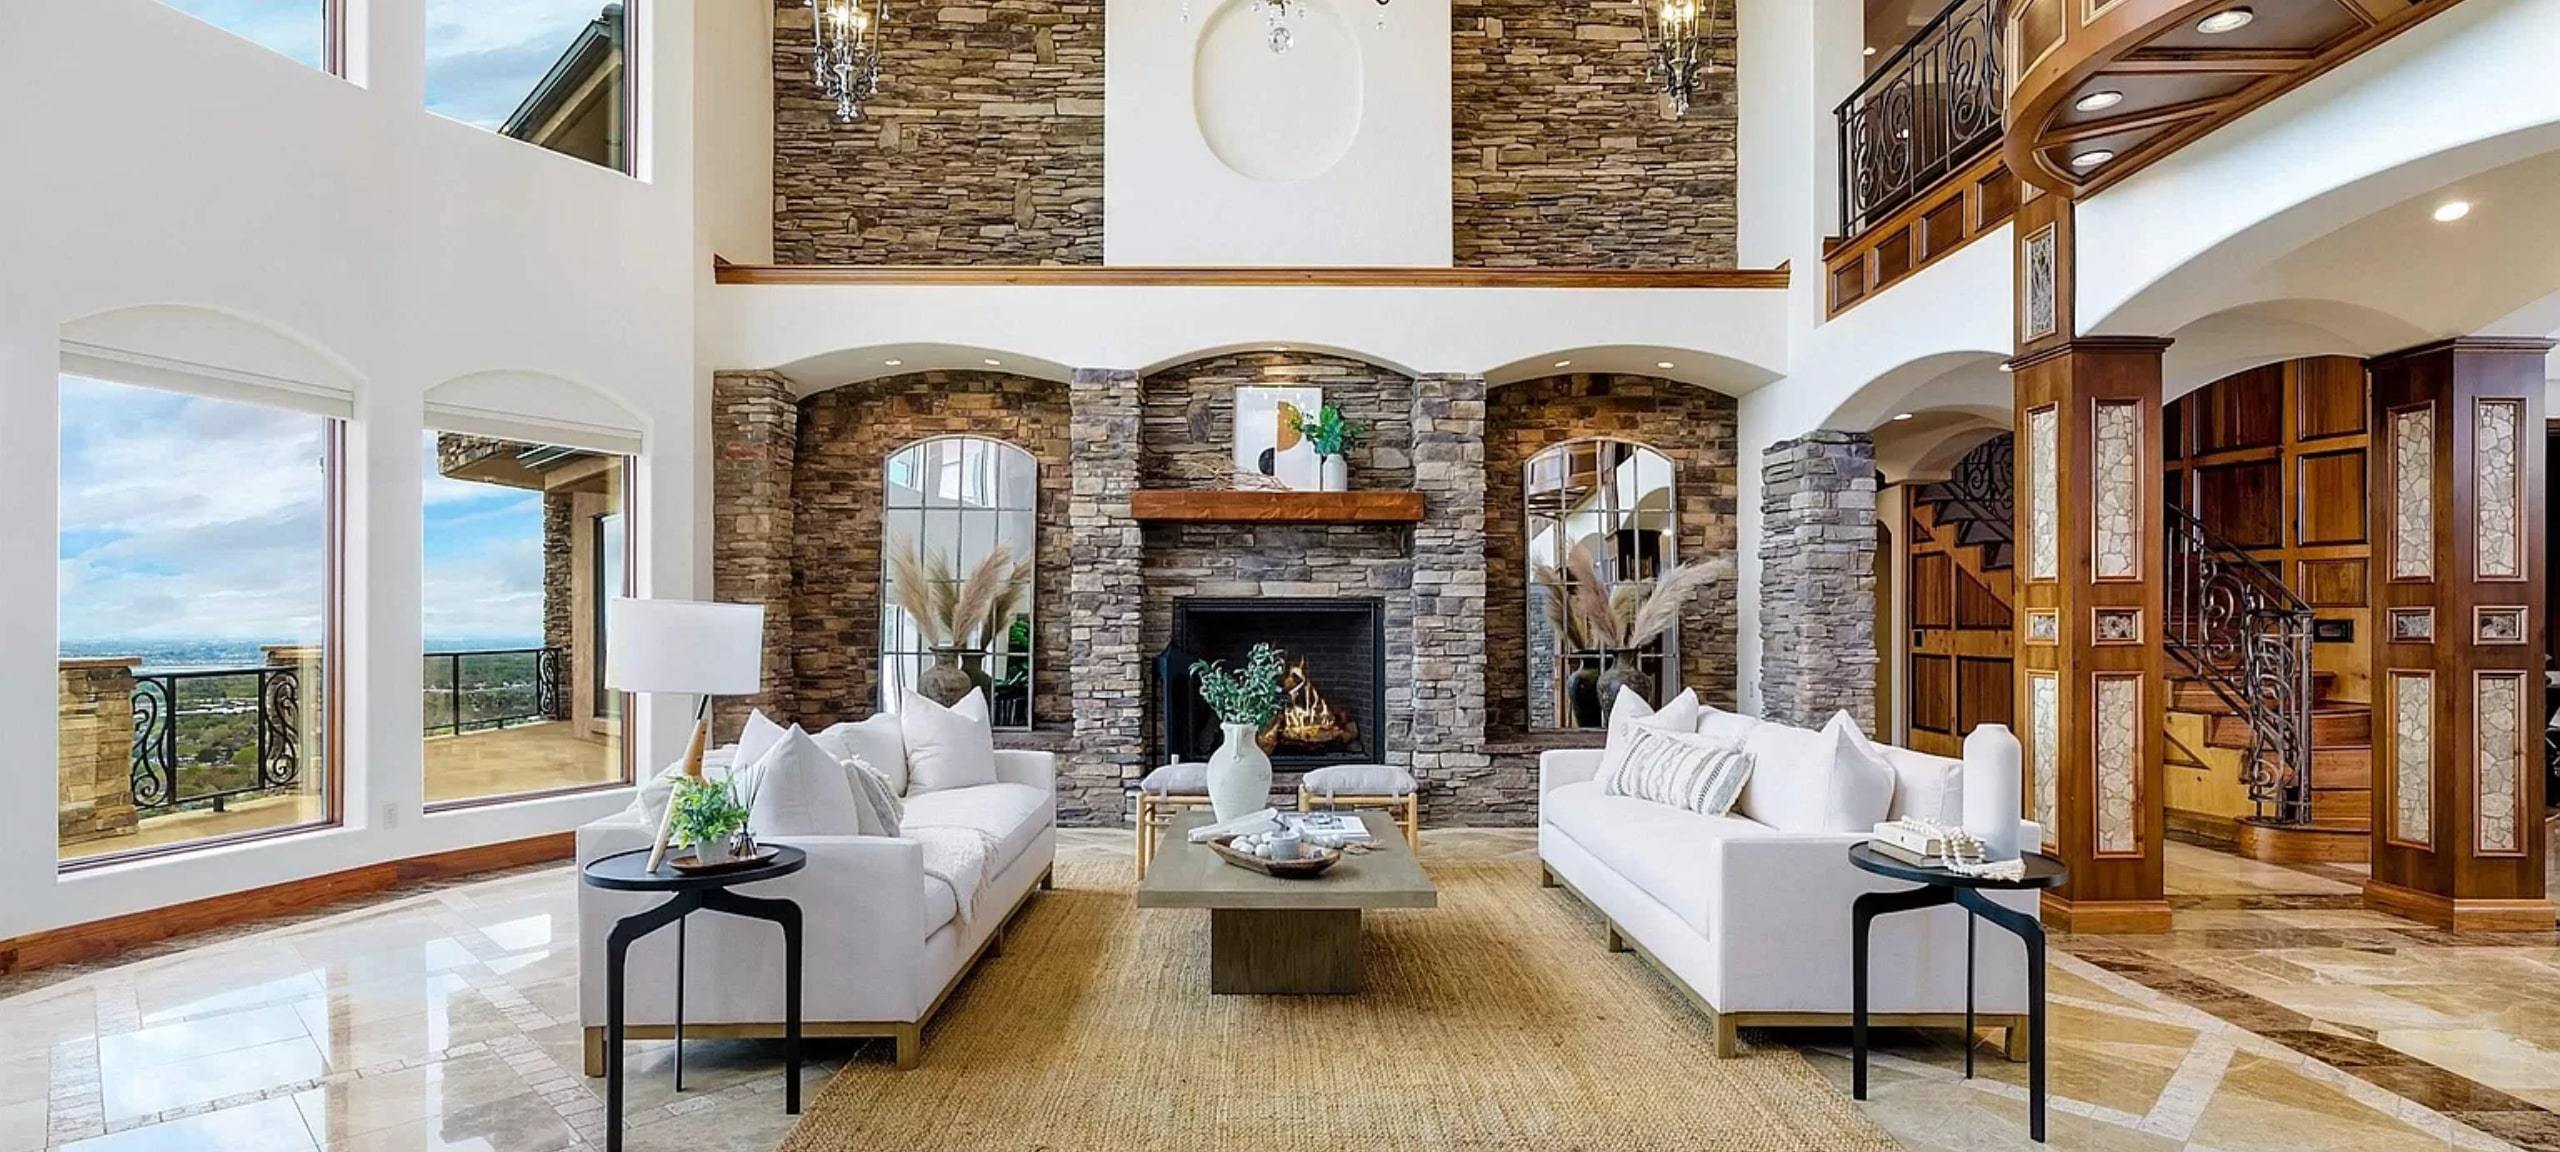 Modern living room typical of Boise, Idaho luxury homes